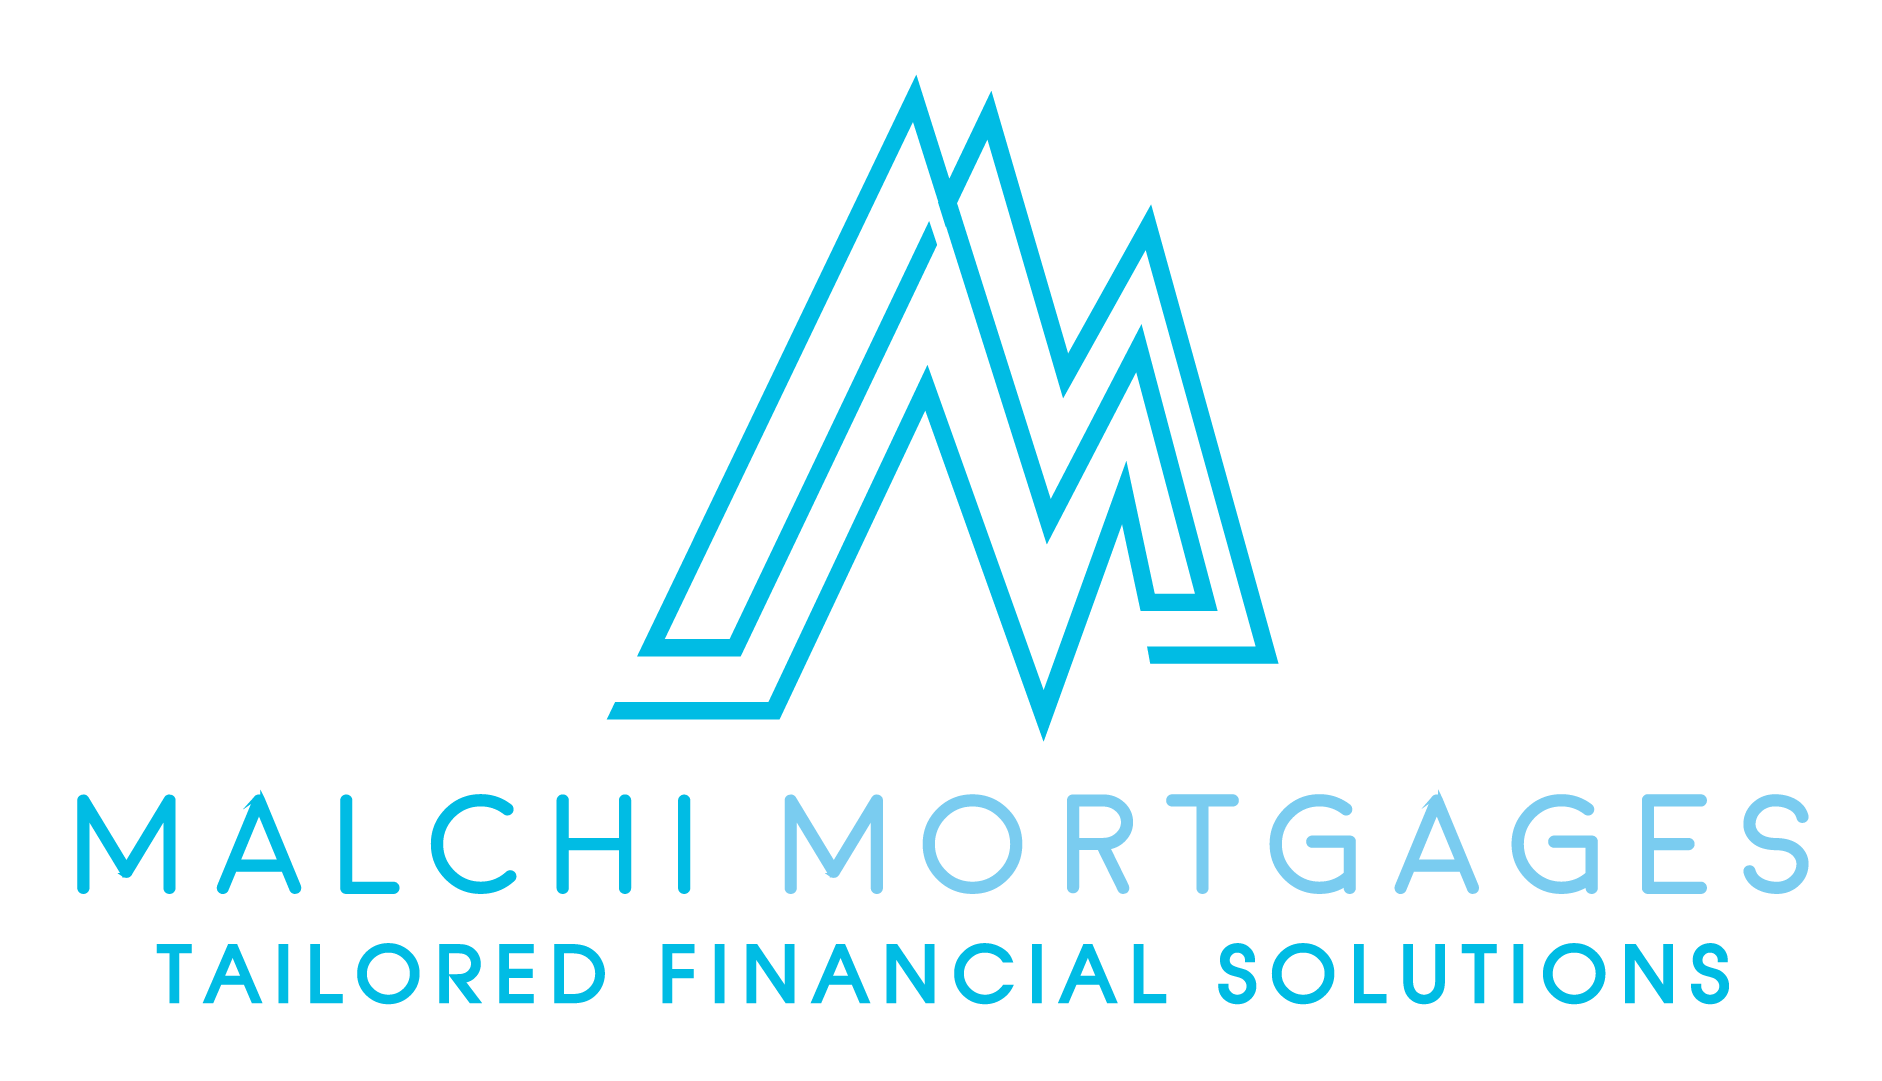 Malchi Mortgages